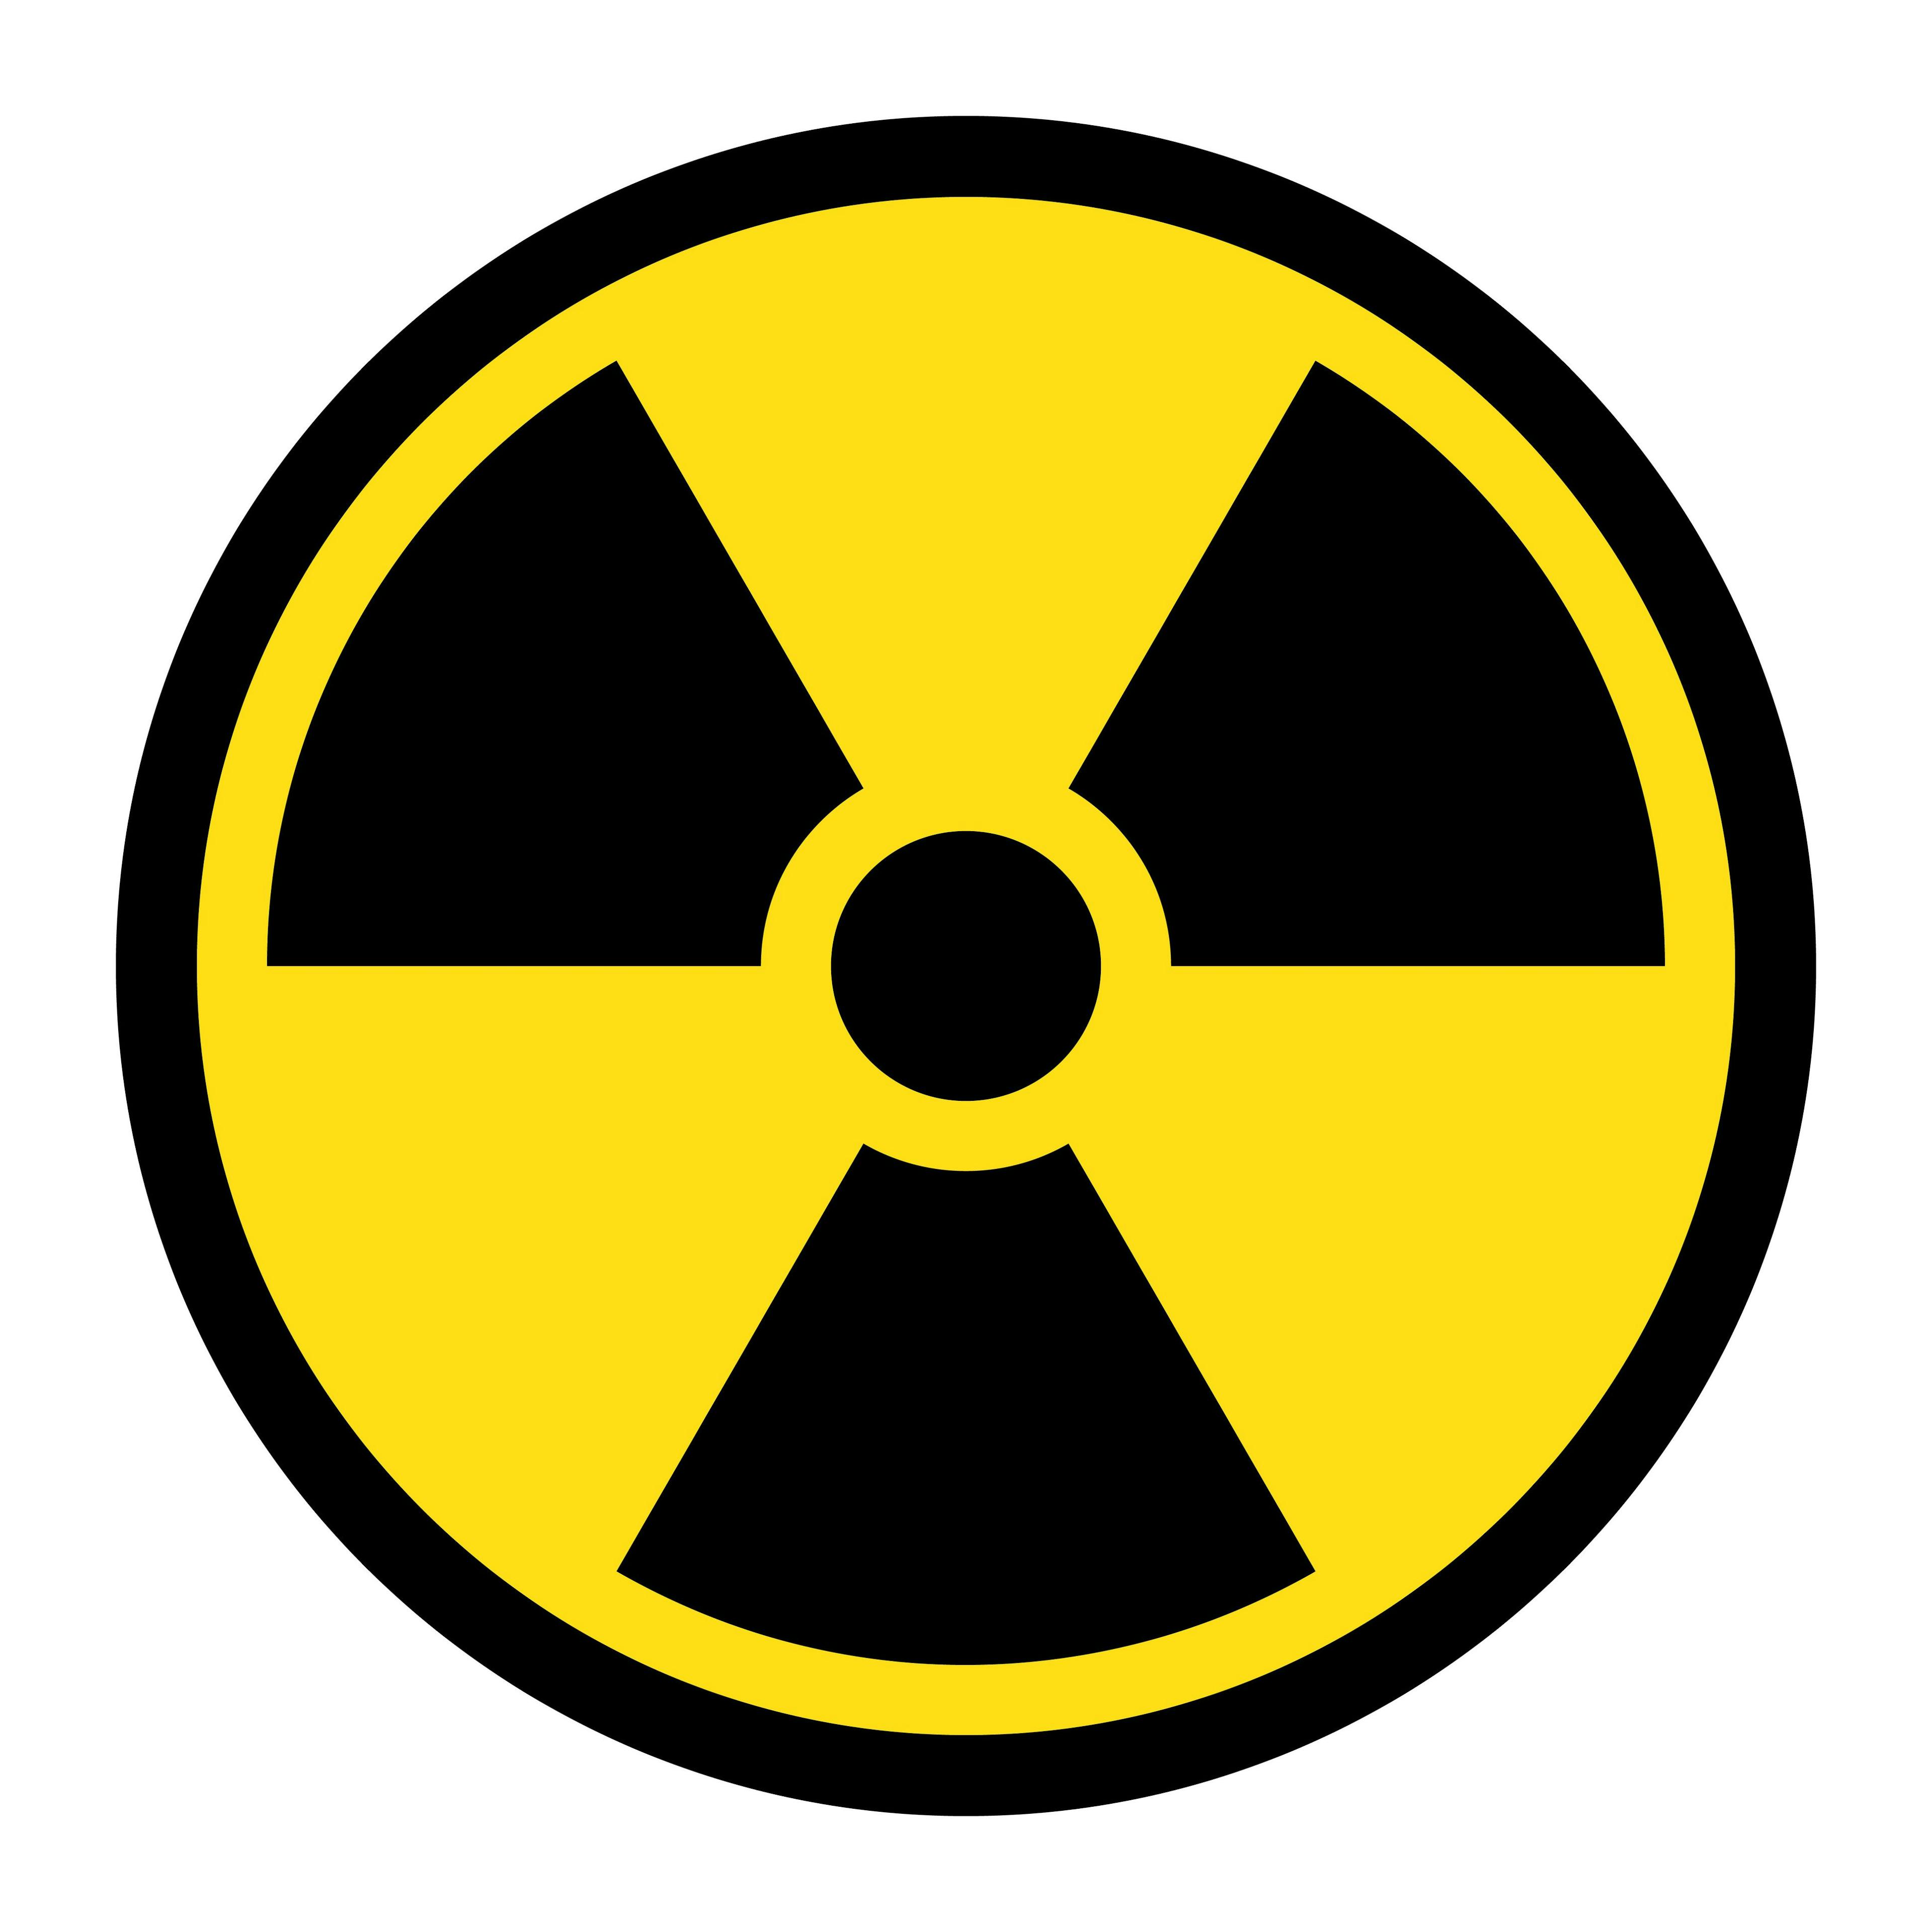 Radiation hazard sign. Symbol of radioactive threat alert | Image Credit: © nikolae - stock.adobe.com